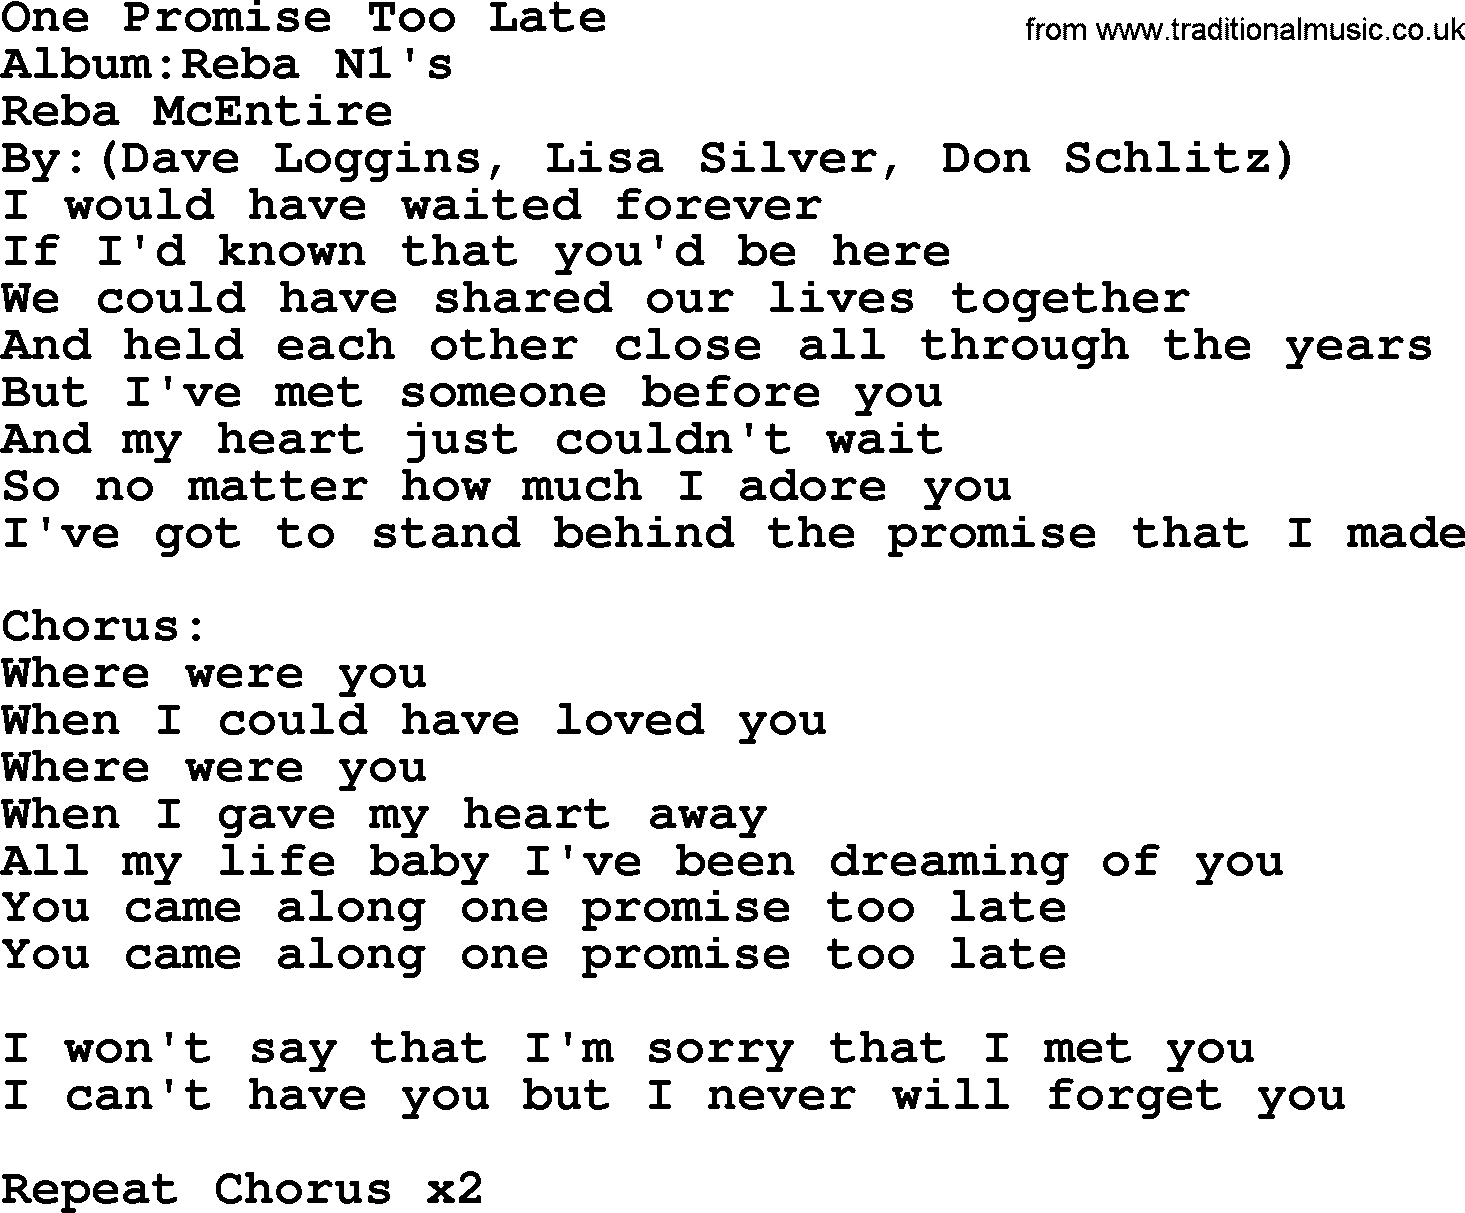 Reba McEntire song: One Promise Too Late lyrics